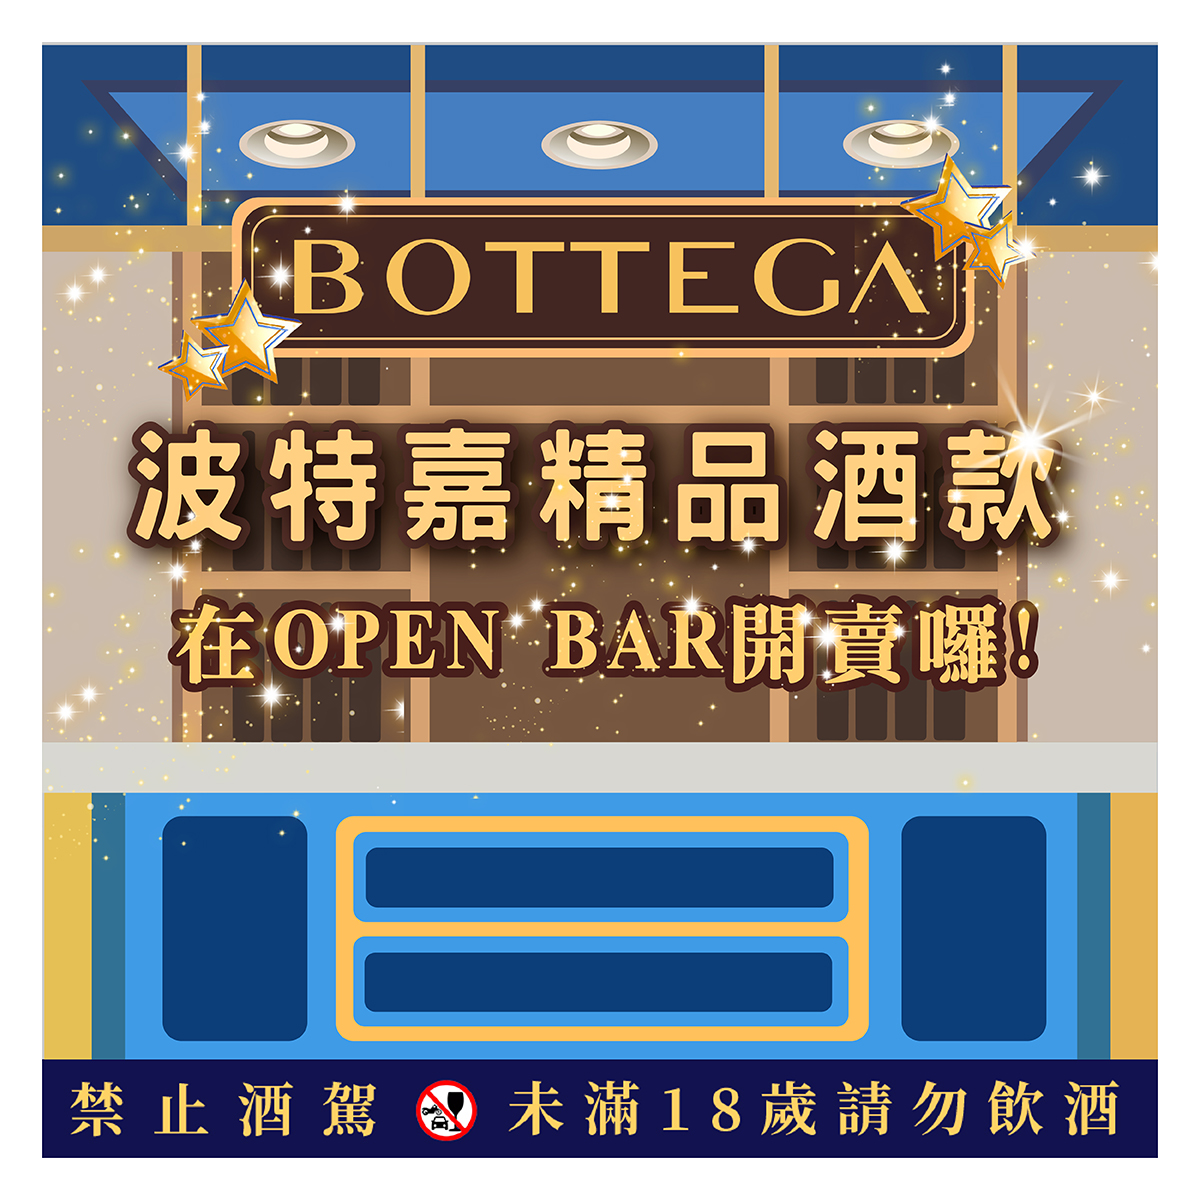 Bottega精品酒款 7-11 open 酒 bar